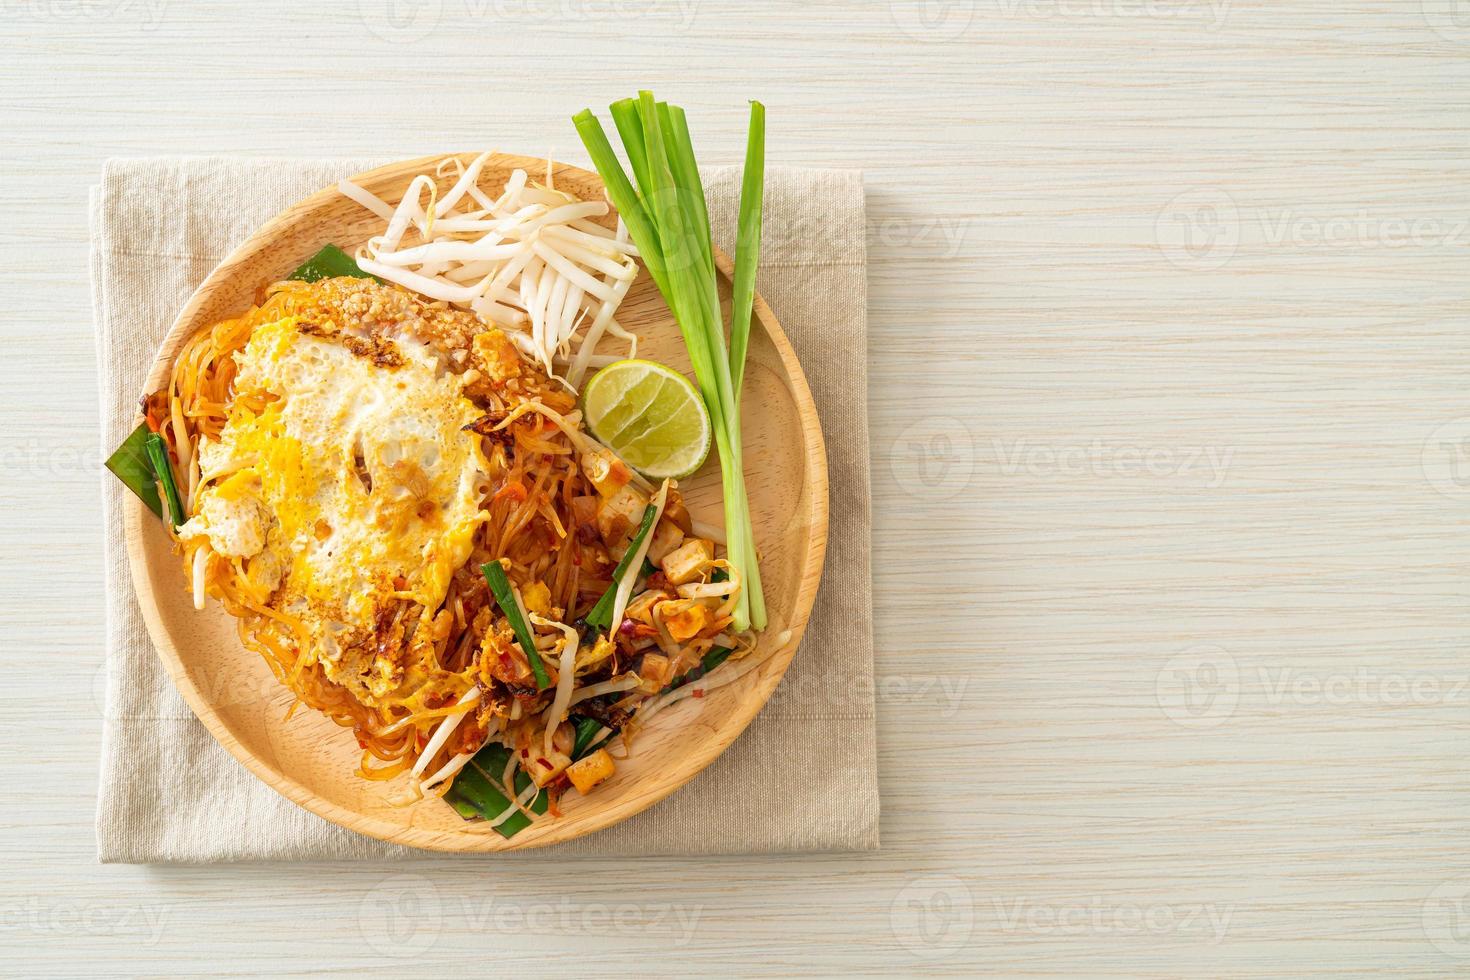 pad thai - fideos salteados al estilo tailandés con huevo foto